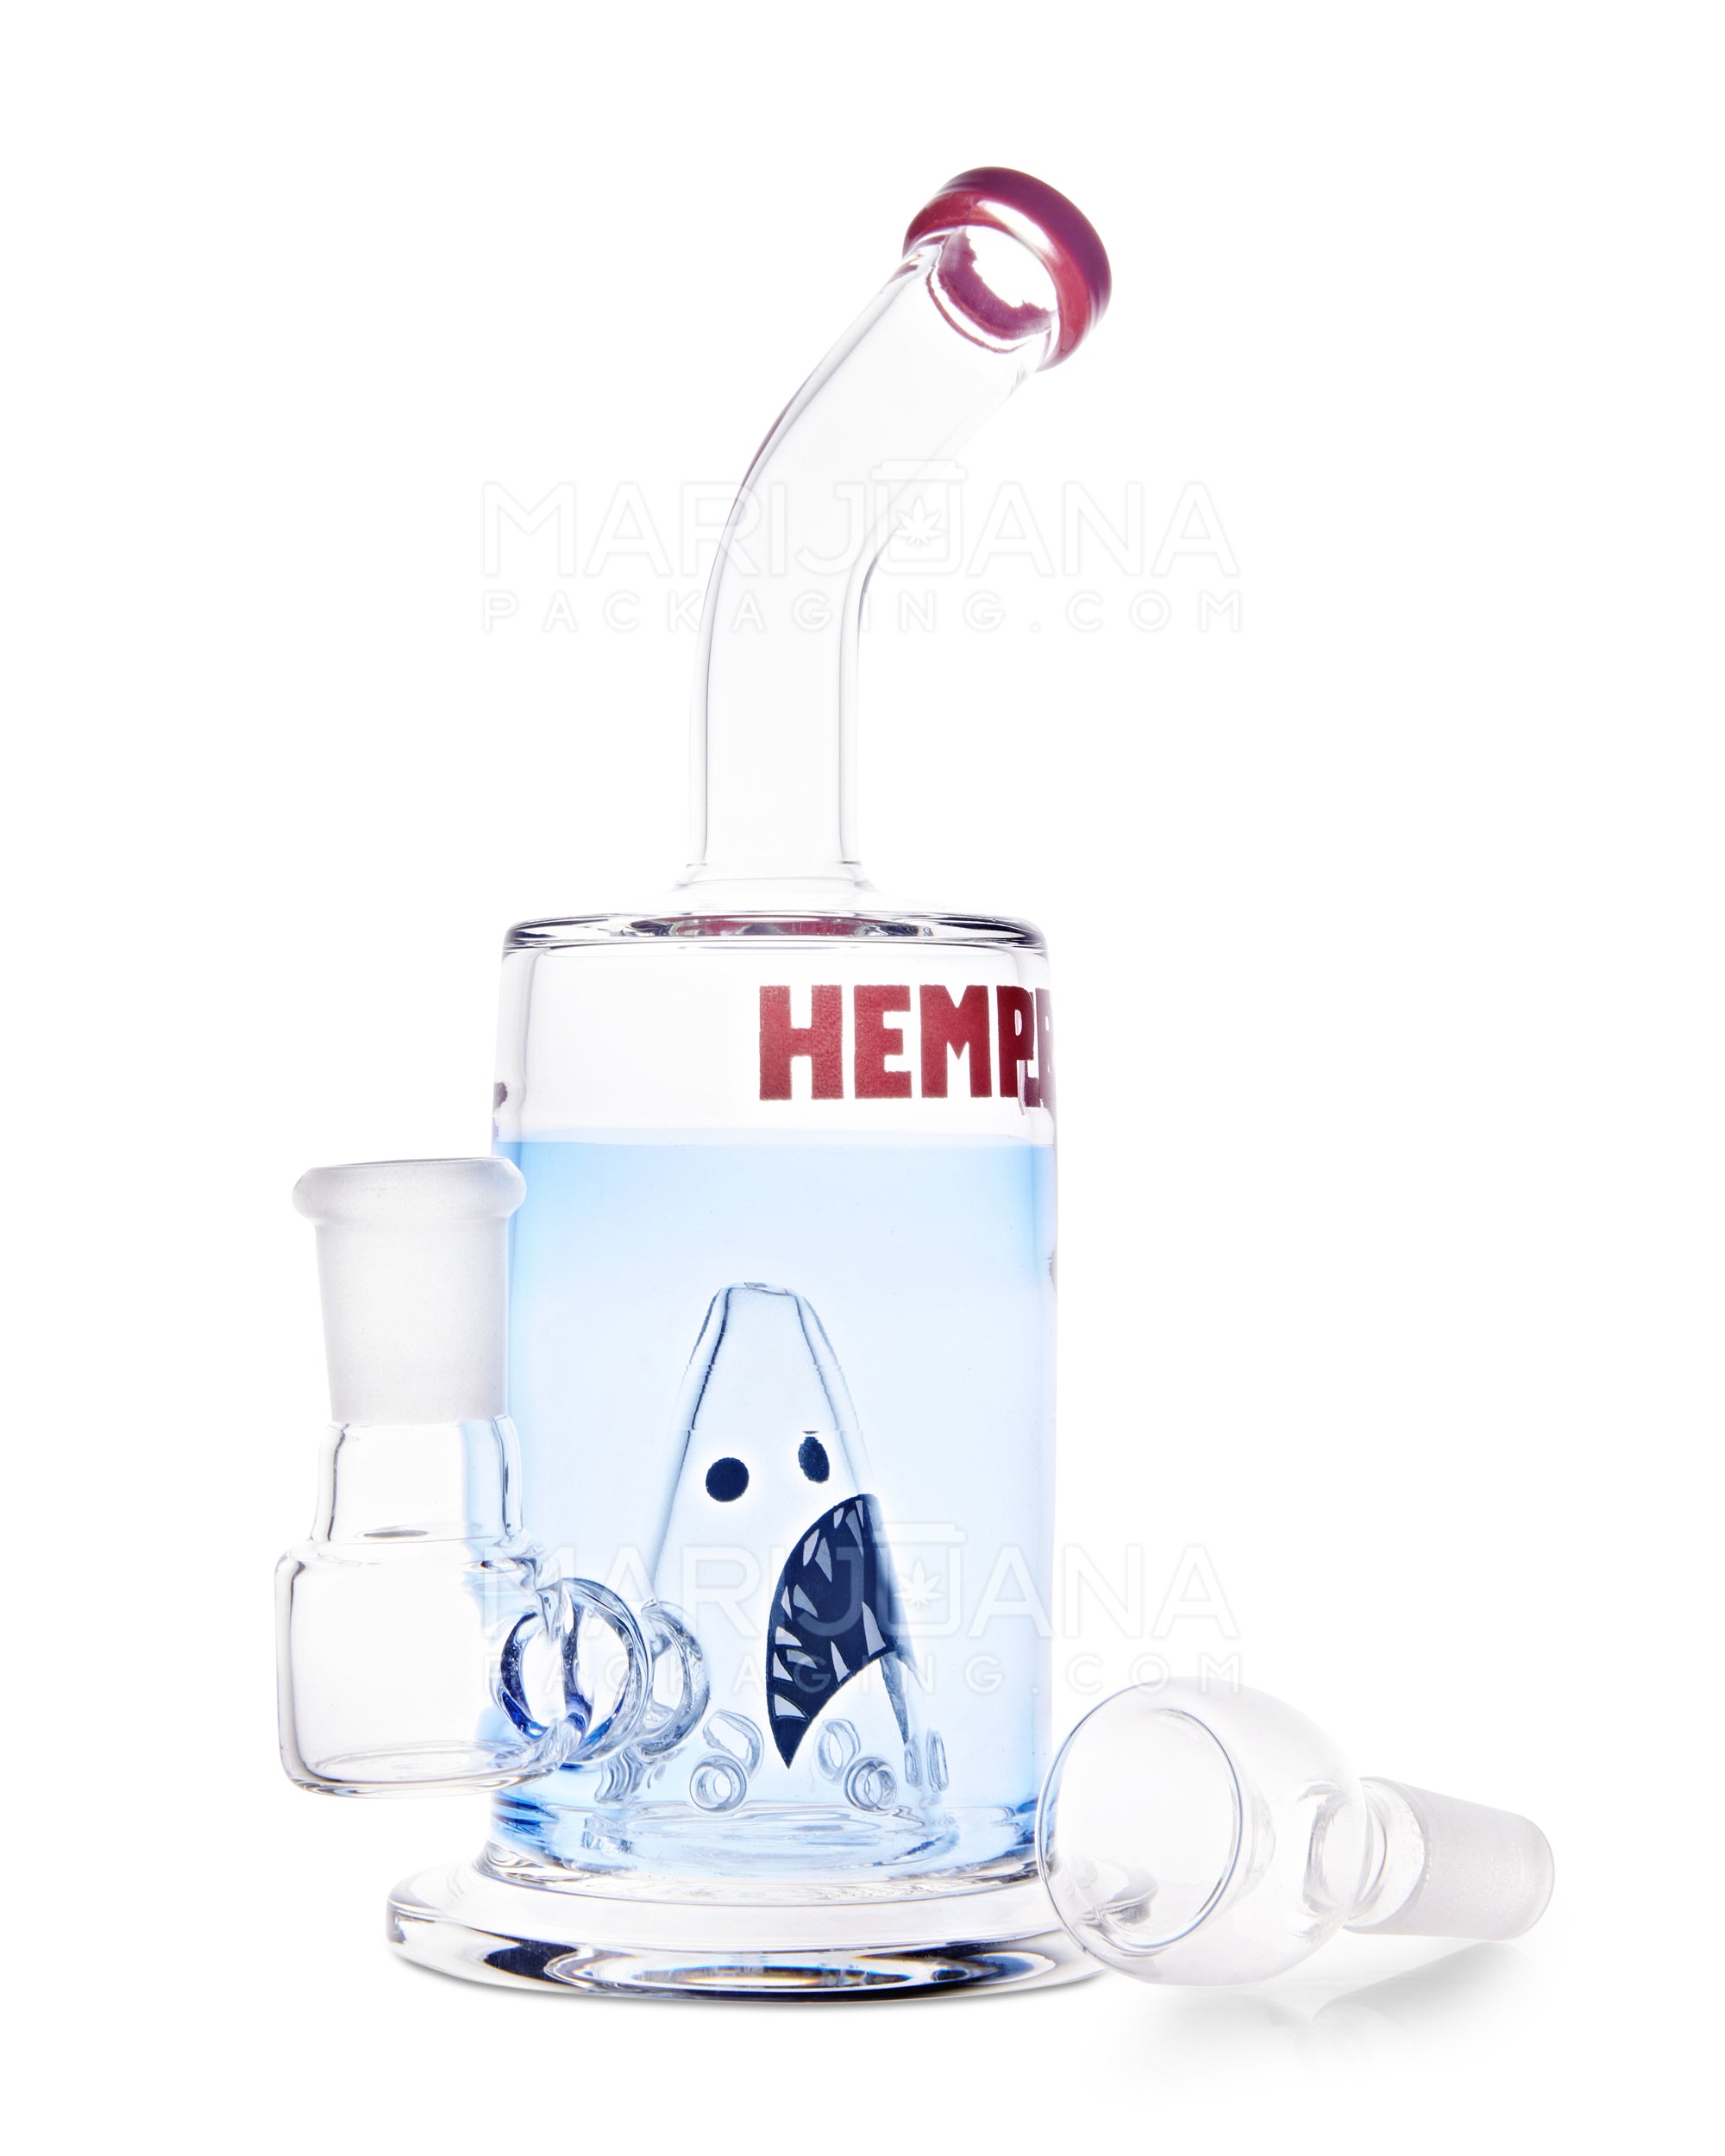 HEMPER | Shark Rig Mini Glass Water Pipe | 7in Tall - 14mm Bowl - Assorted